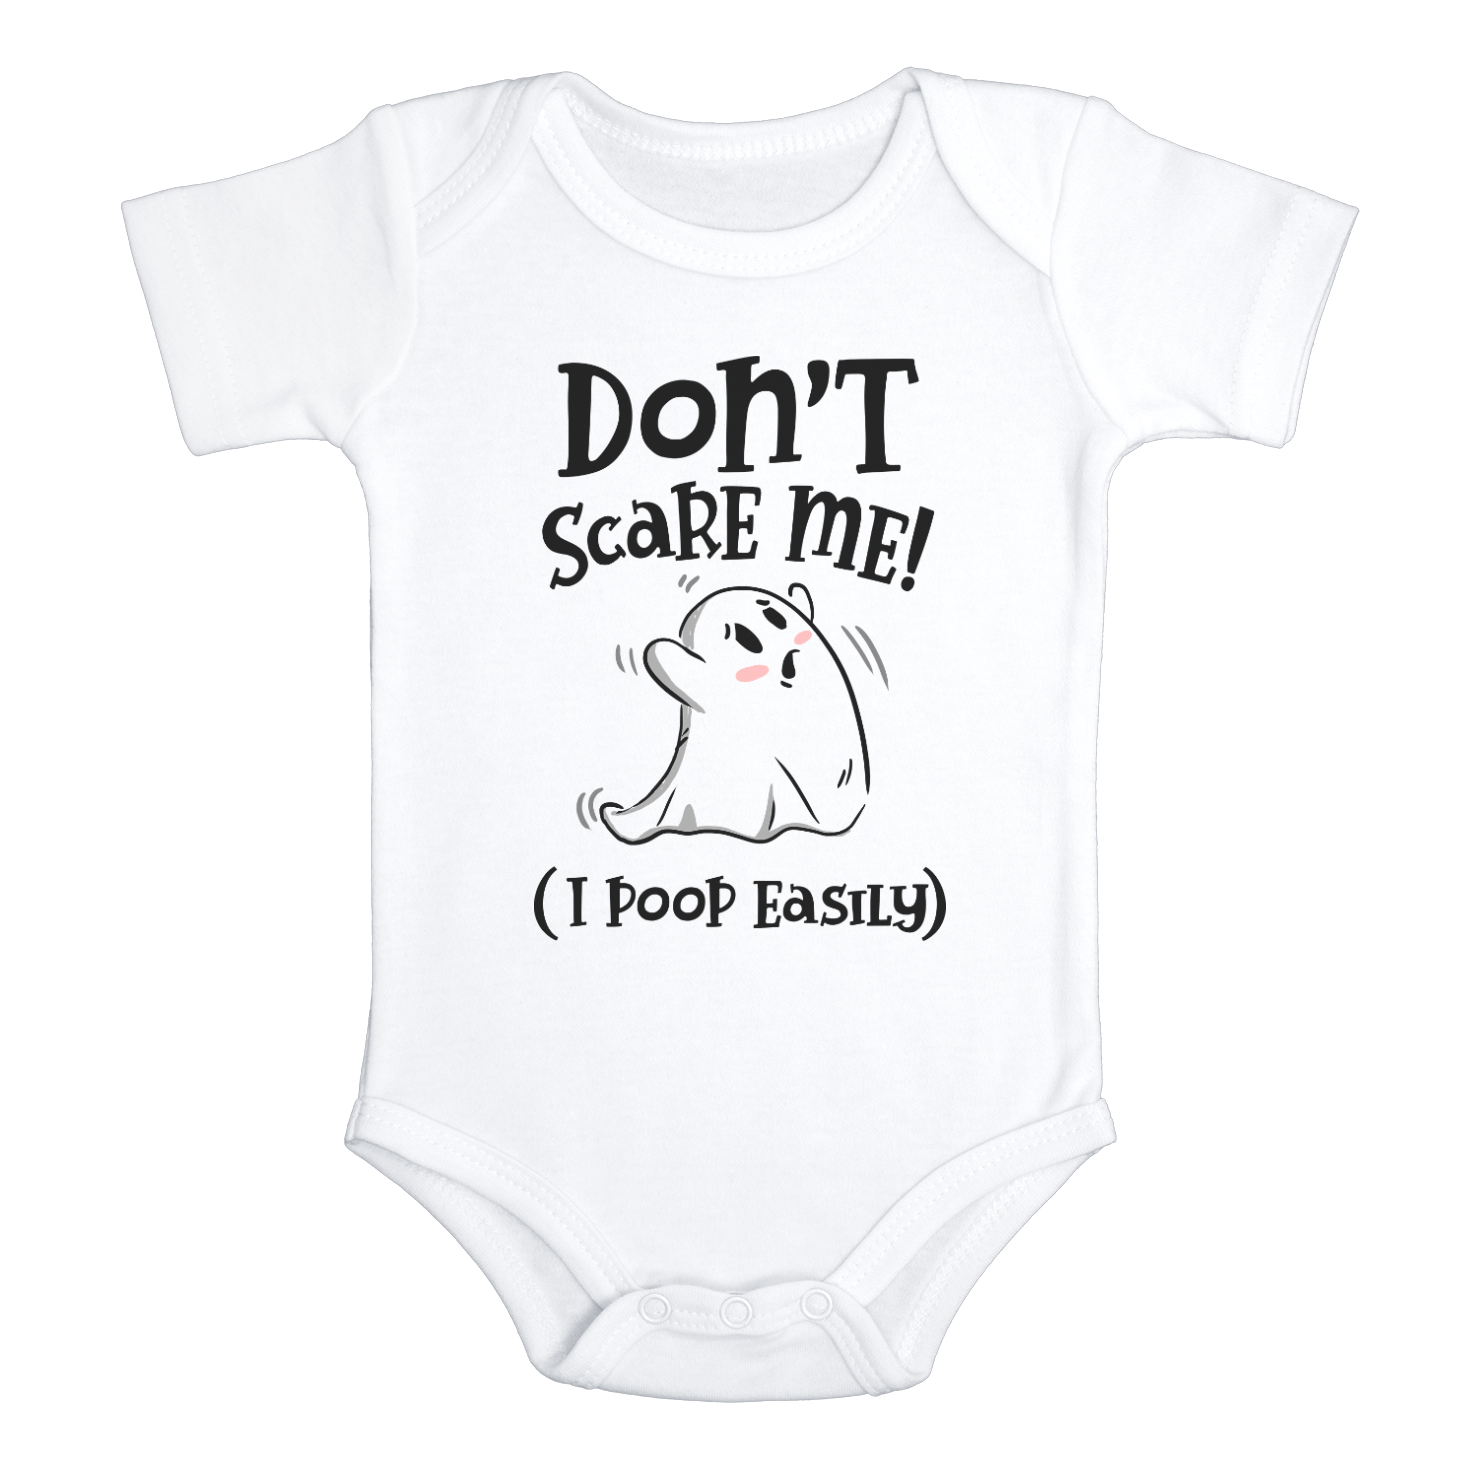 DON'T SCARE ME I POOP EASILY Funny baby Halloween onesies bodysuit (white: short or long sleeve)